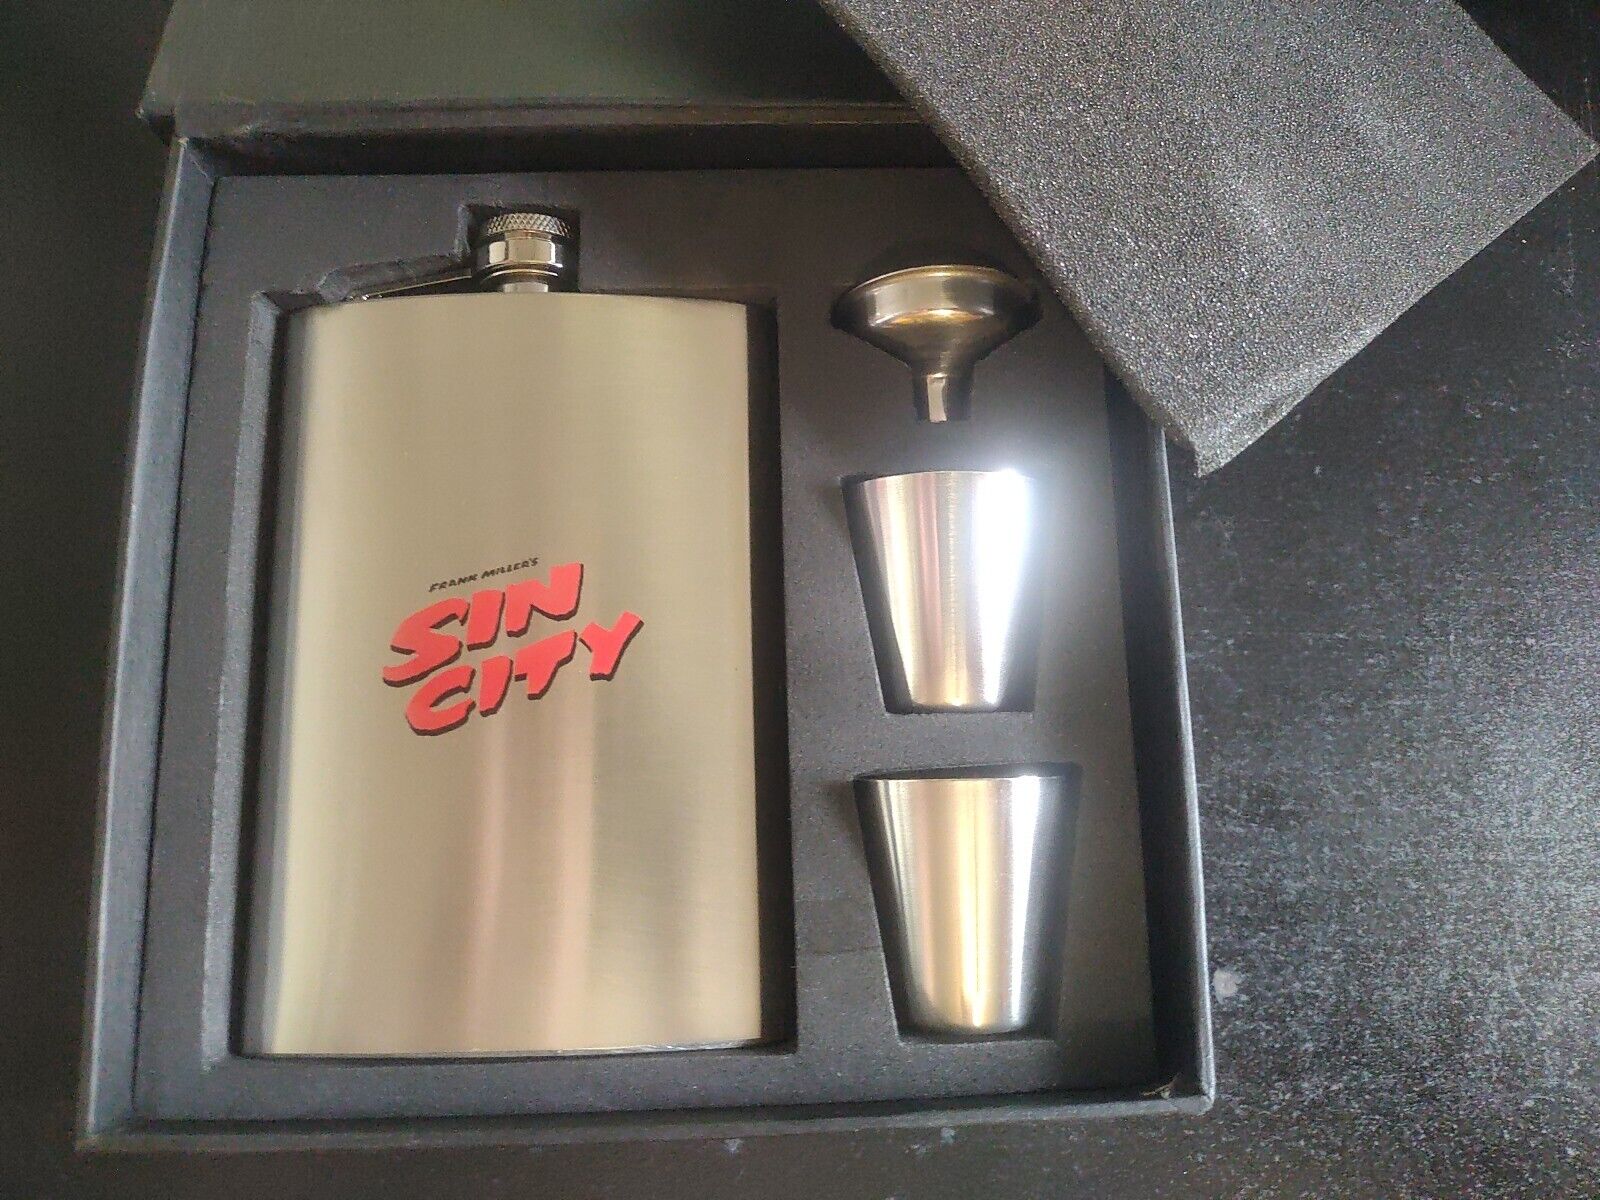 Frank Miller's Sin City Limited Edition Flask Set